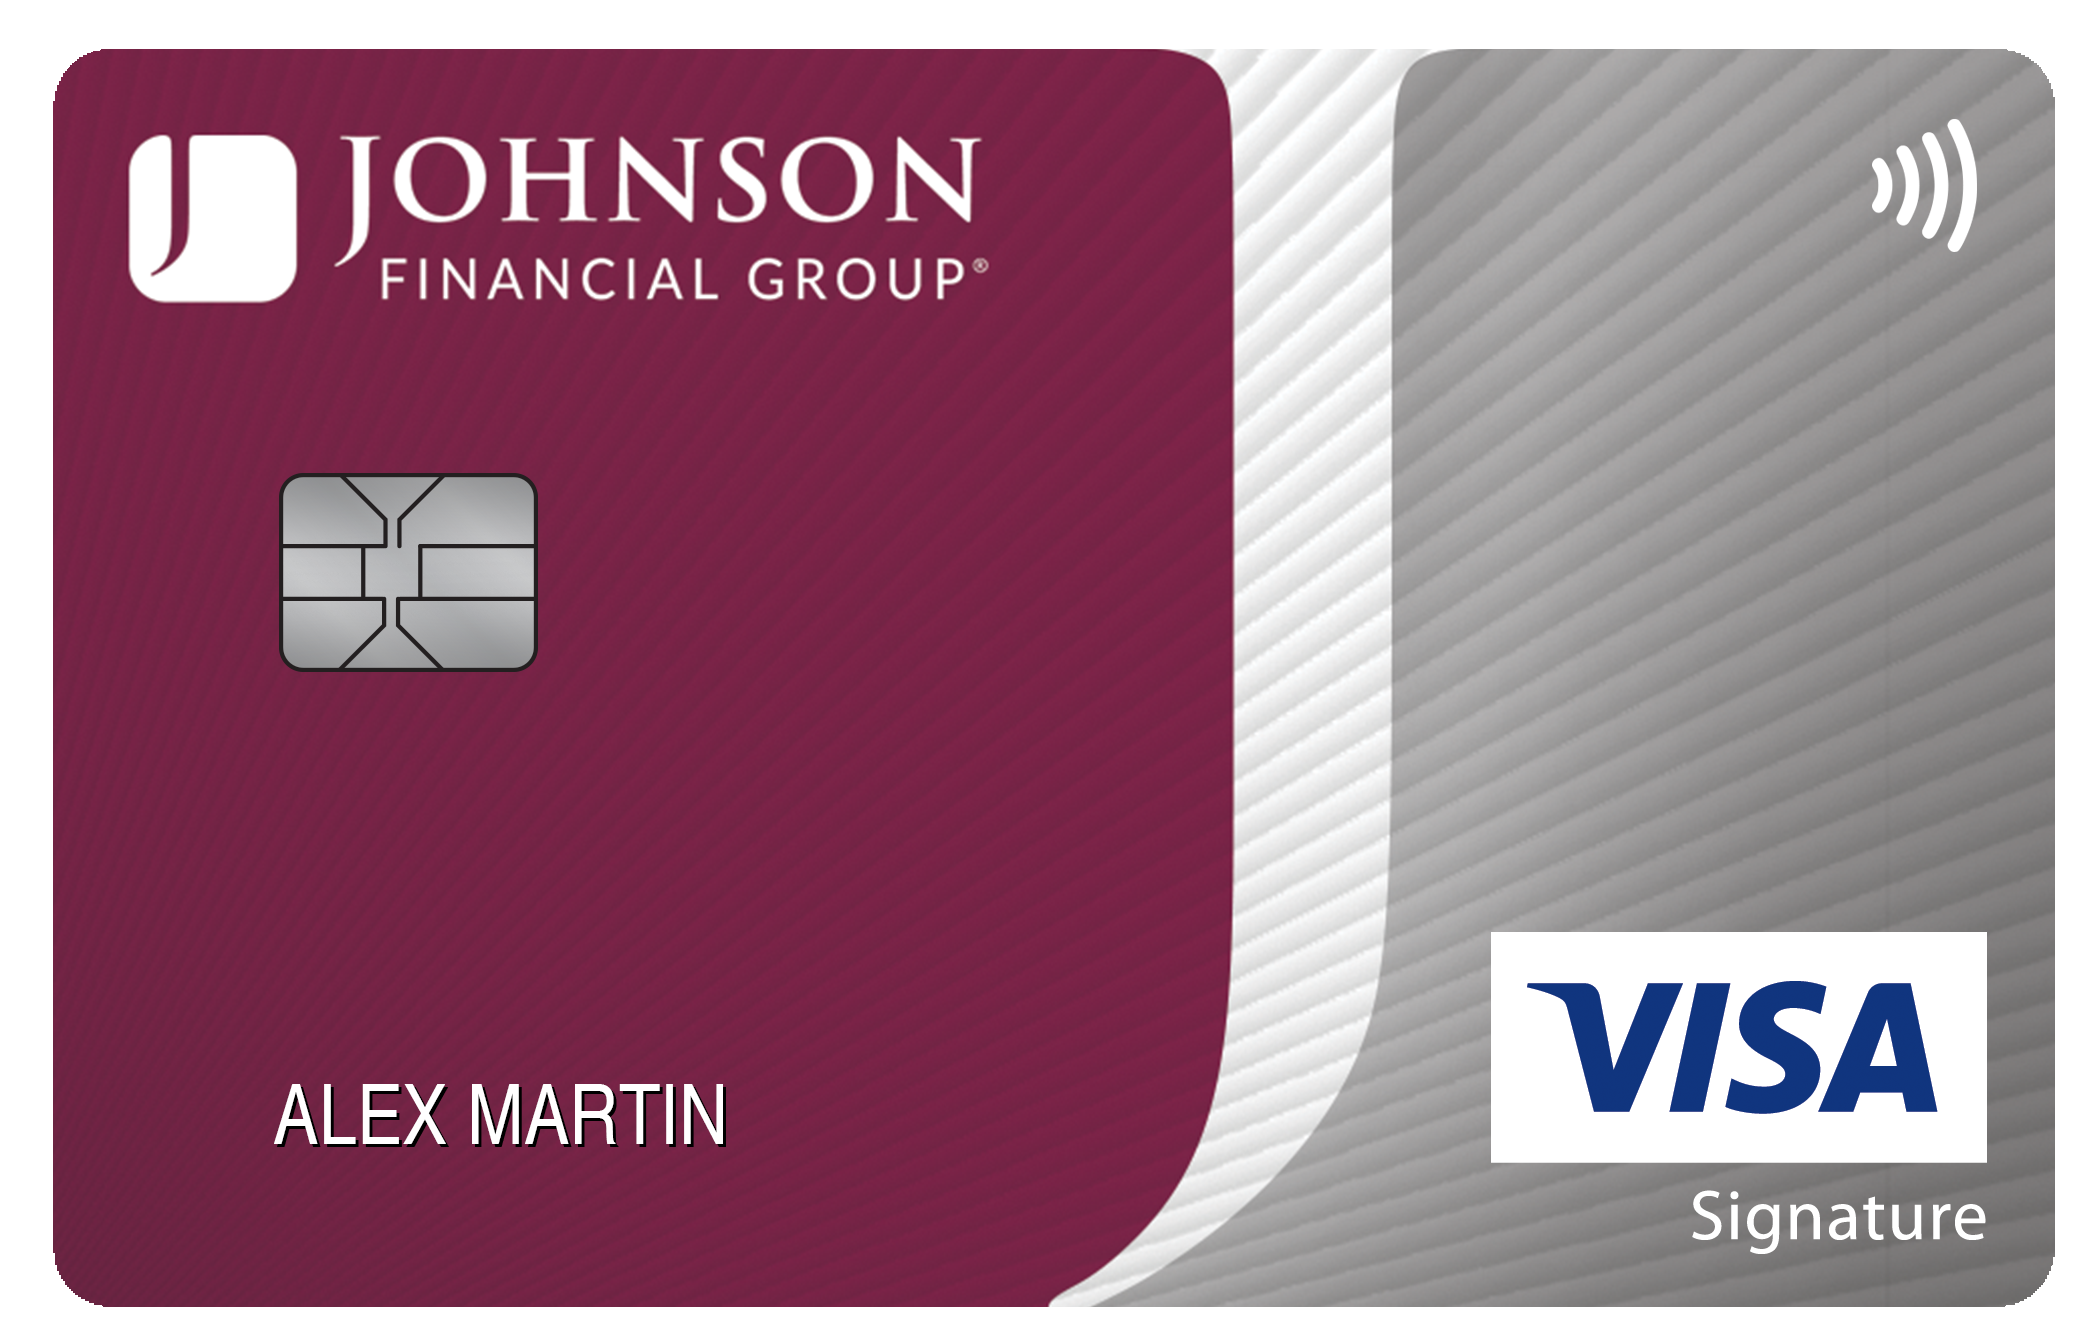 Johnson Financial Group Everyday Rewards+ Card